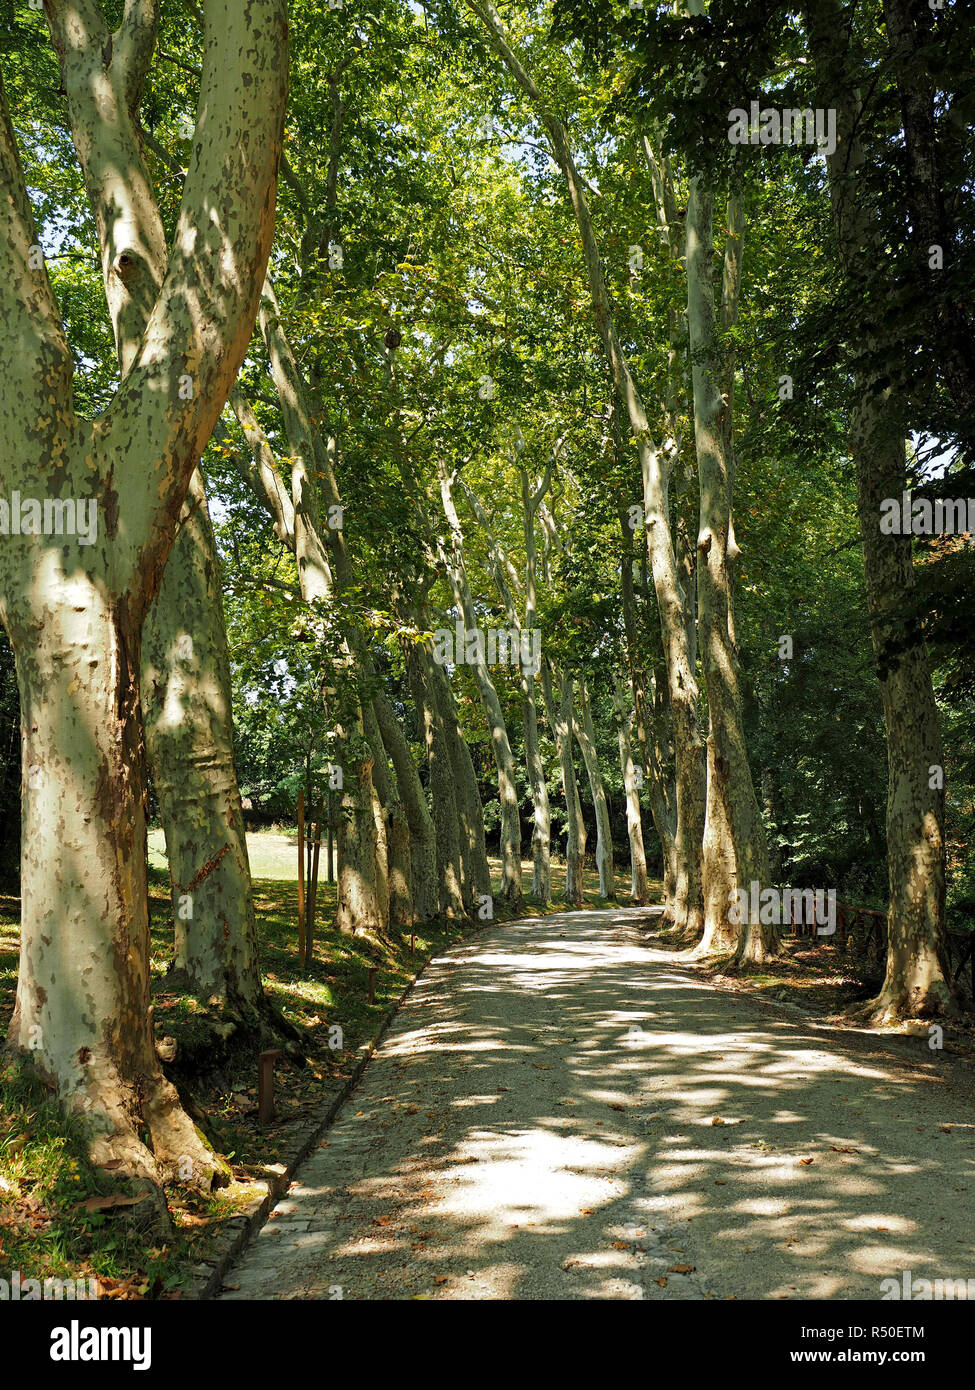 avenue of tall mature London Plane trees (Platanus x acerifolia or Platanus x hispanica) cast dappled shade on a country lane in Tuscany, Italy Stock Photo